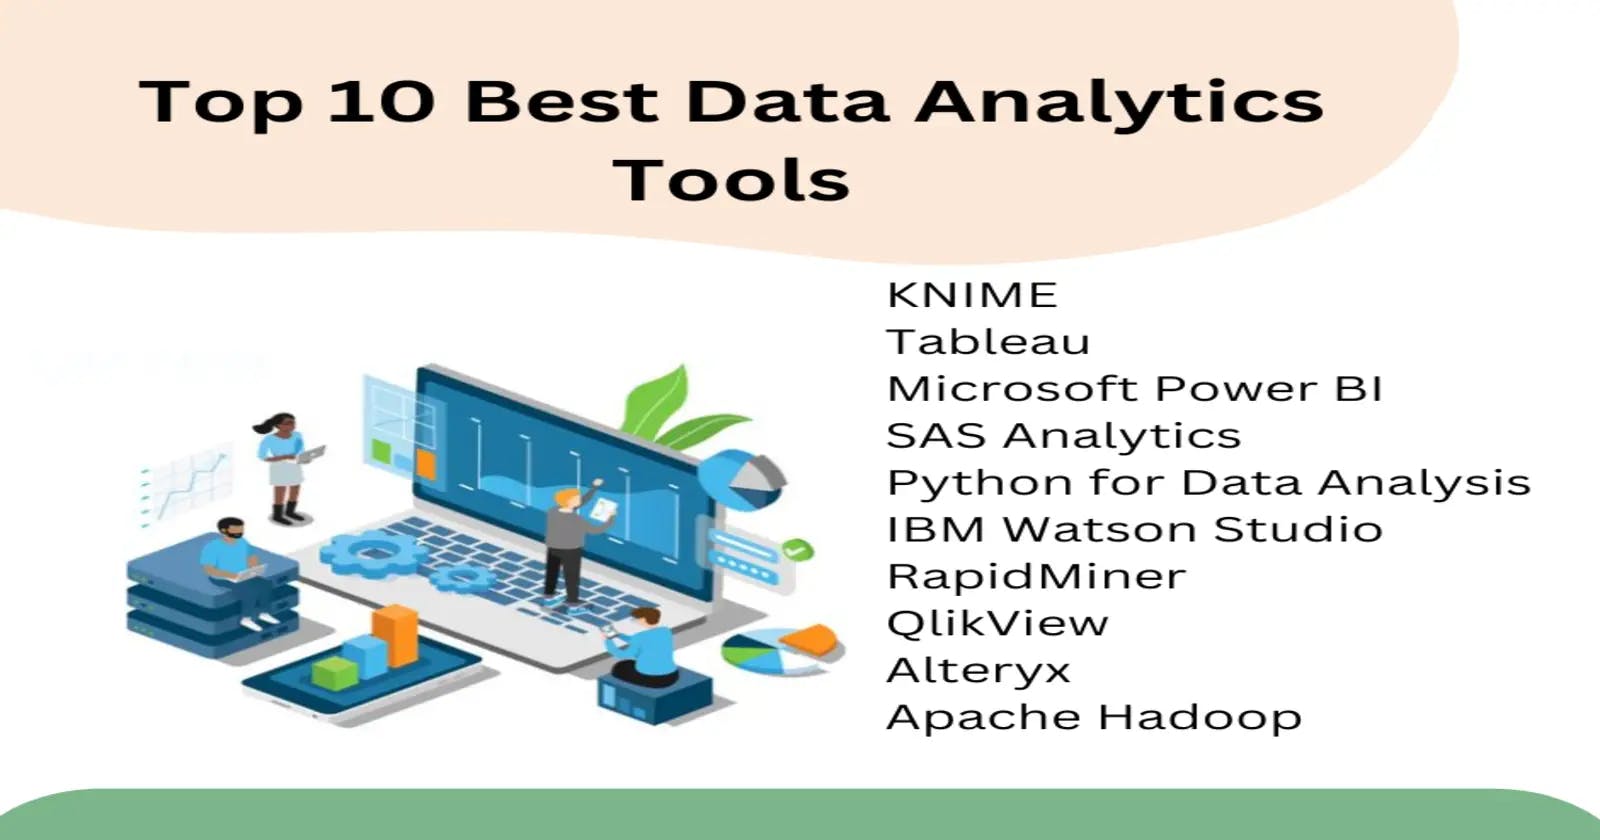 Top 10 Best Data Analytics Tools